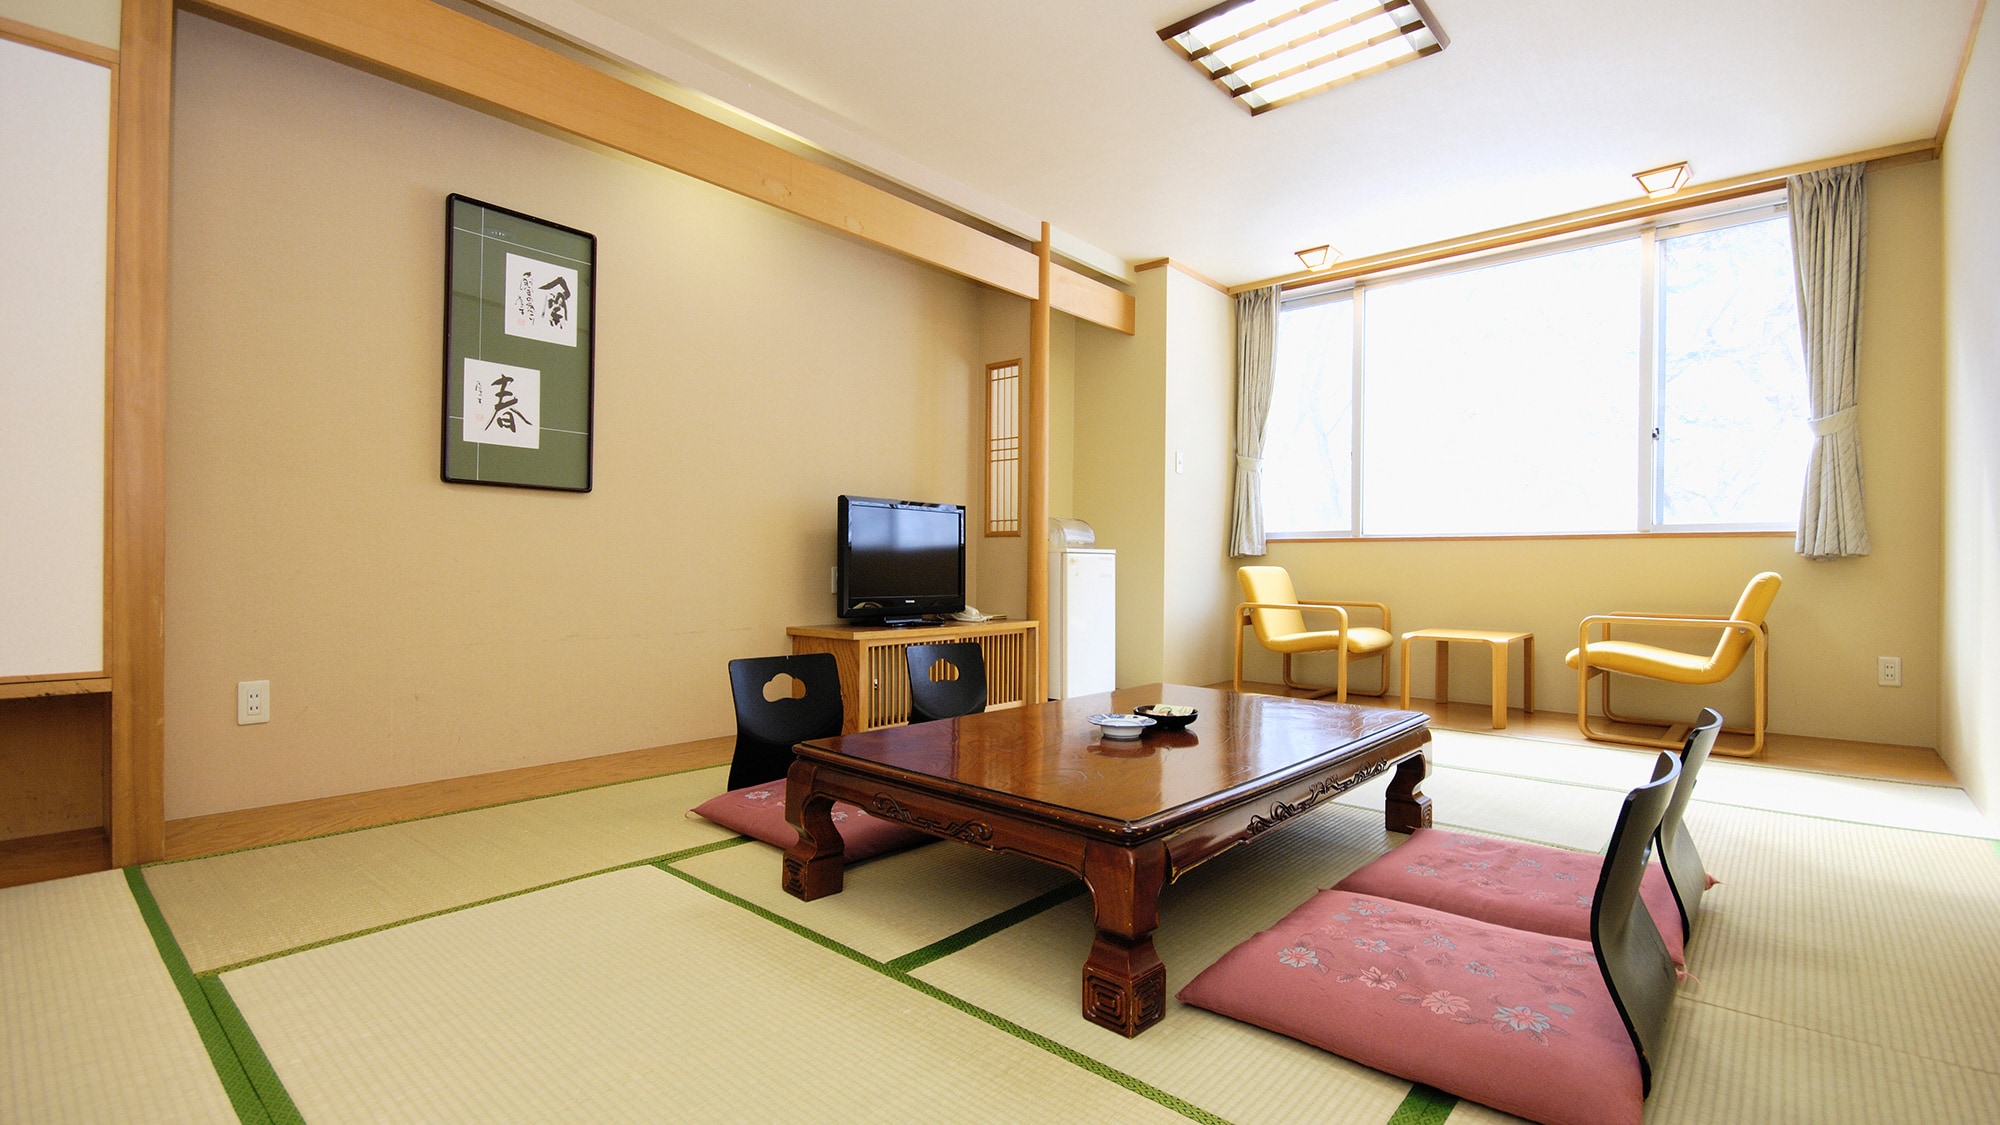 [Kamar bergaya Jepang] Ini adalah kamar standar bergaya Jepang. Regangkan kaki Anda dan rileks